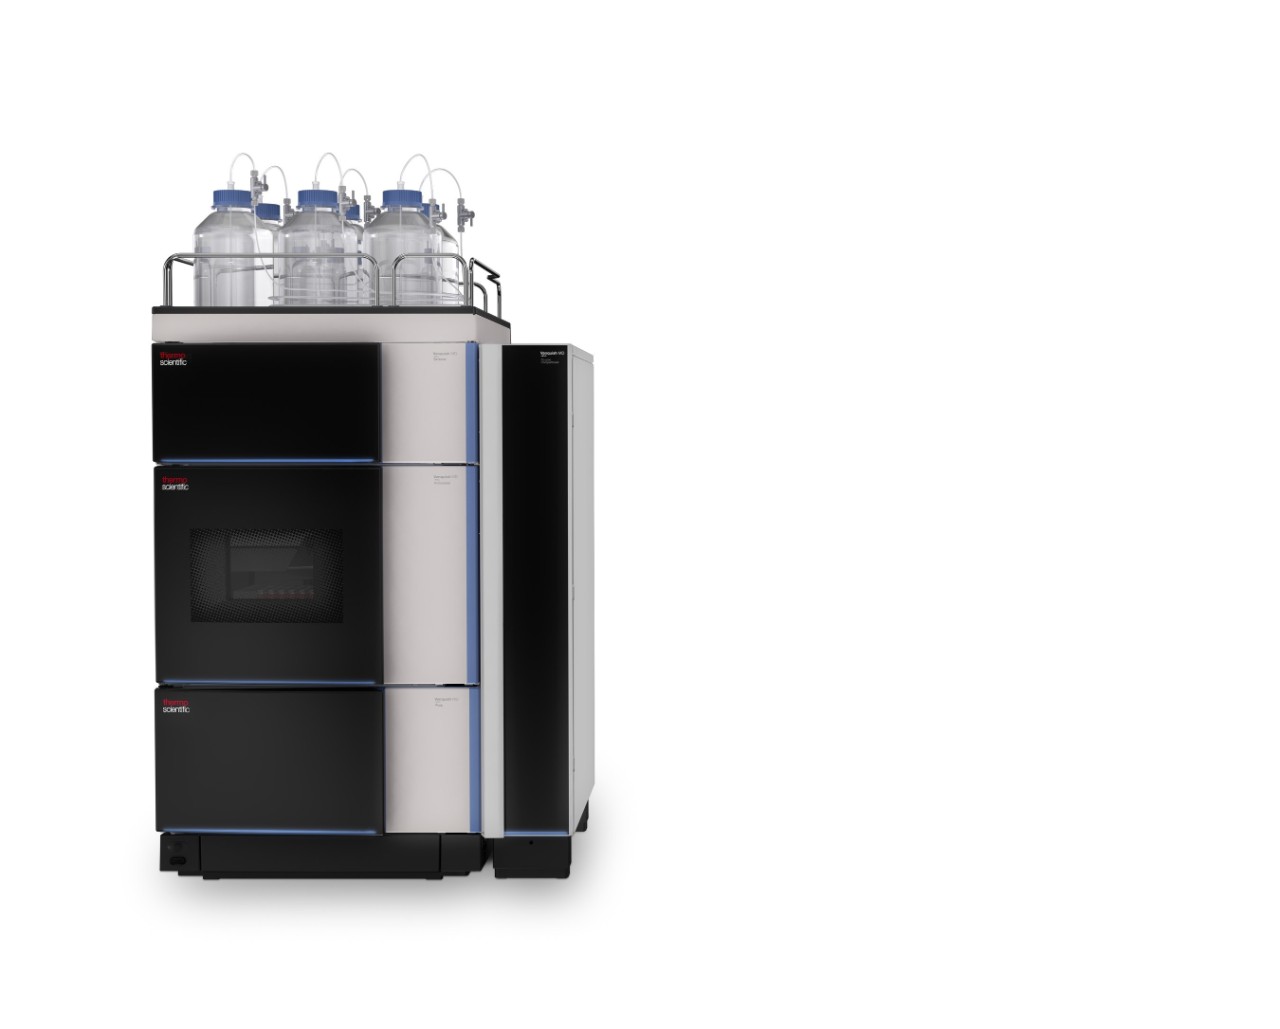 Thermo Scientific Vanquish MD High Performance Liquid Chromatography (HPLC) system